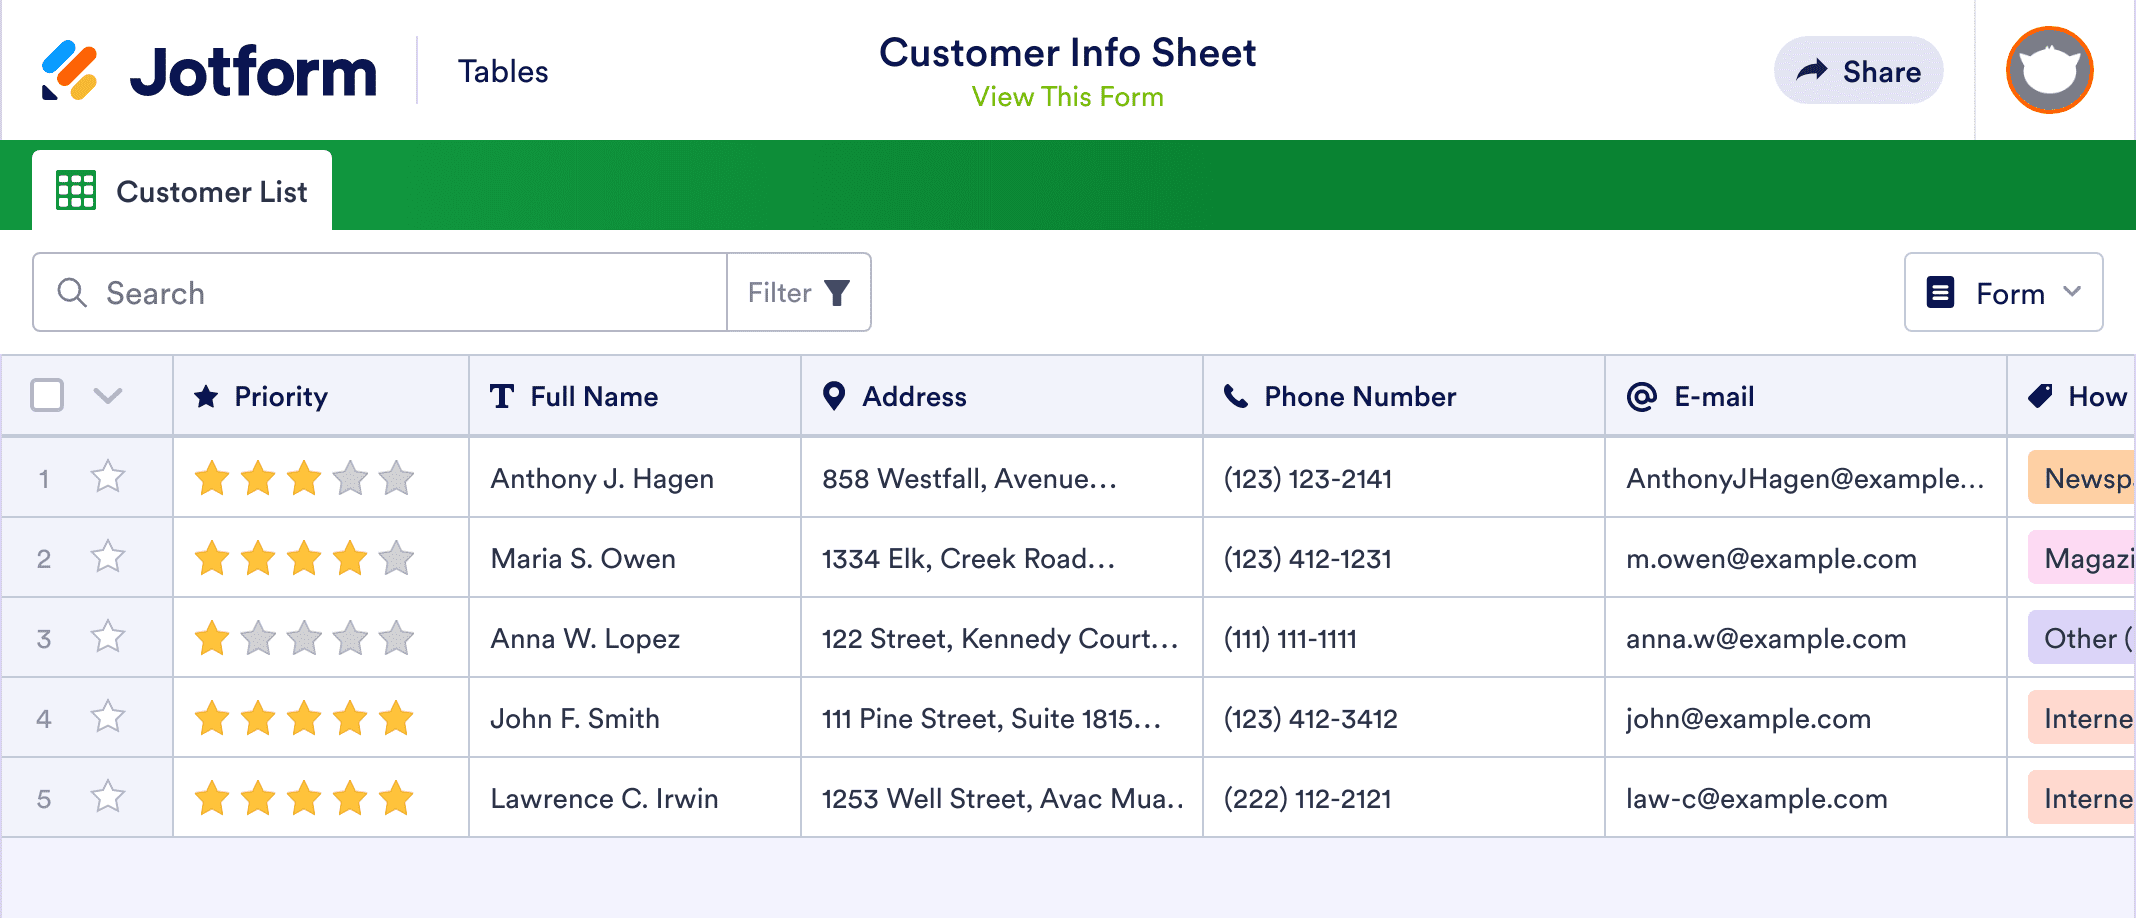 Customer Info Sheet